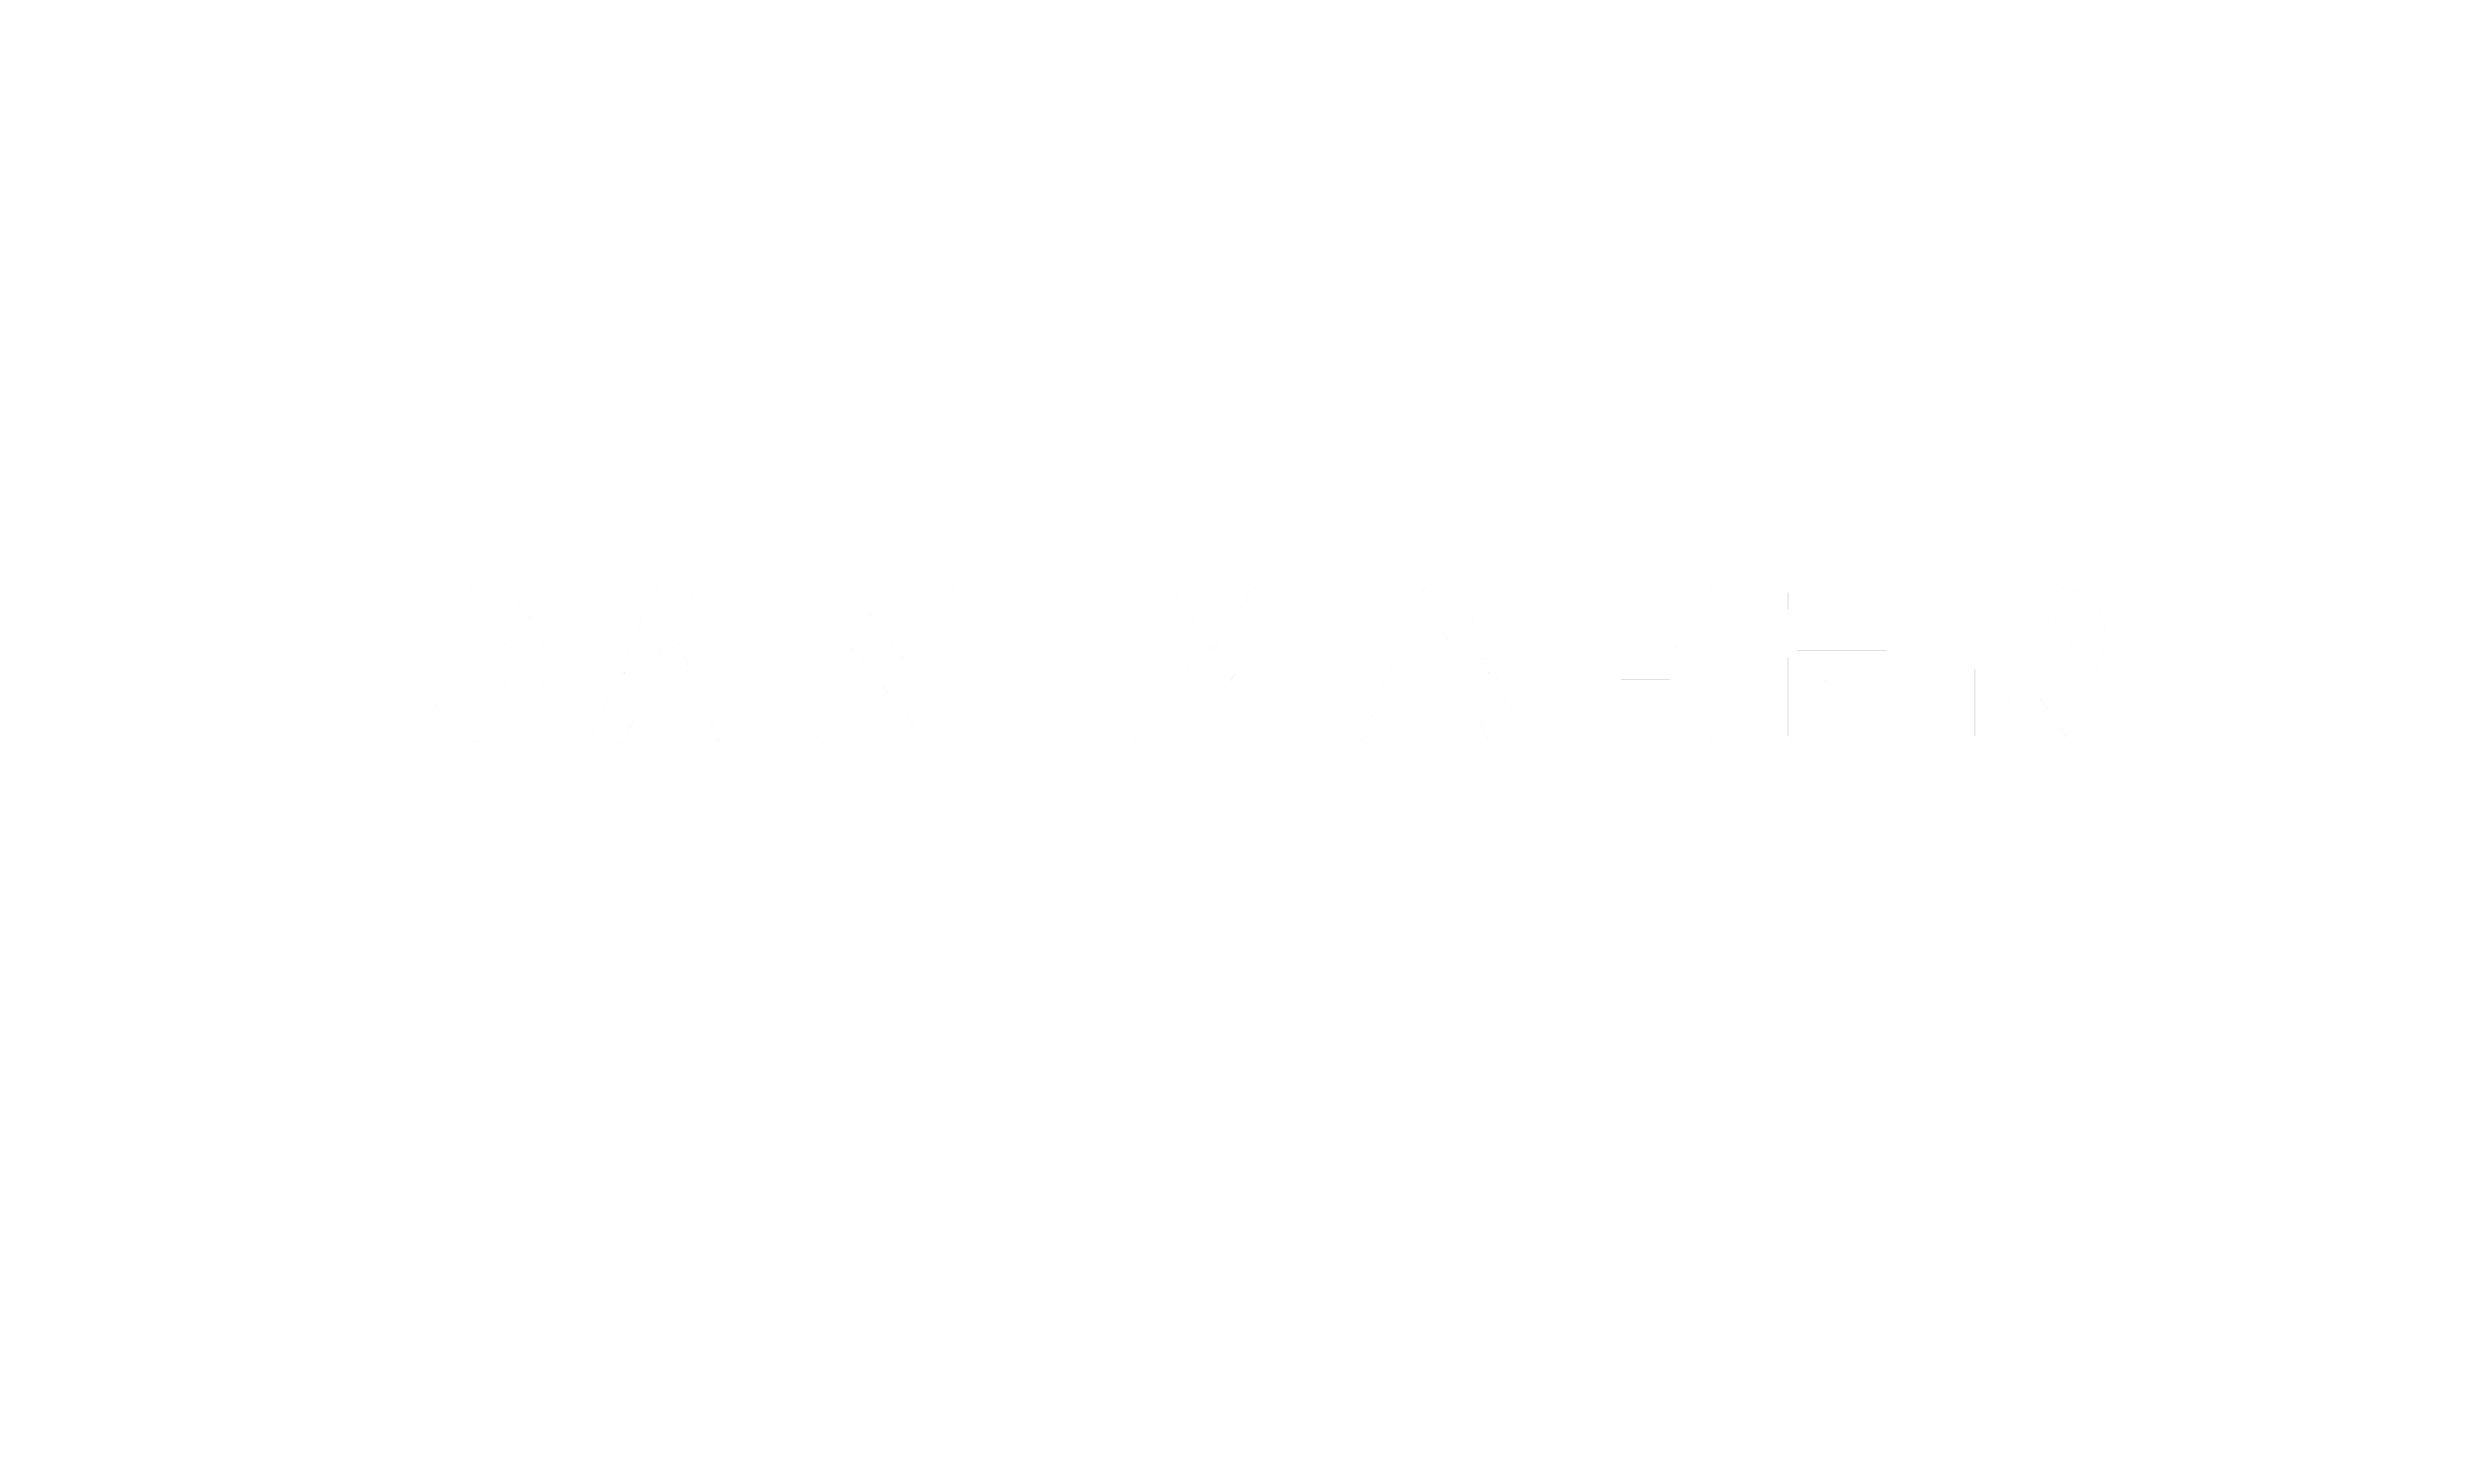 Dan Maher Creative